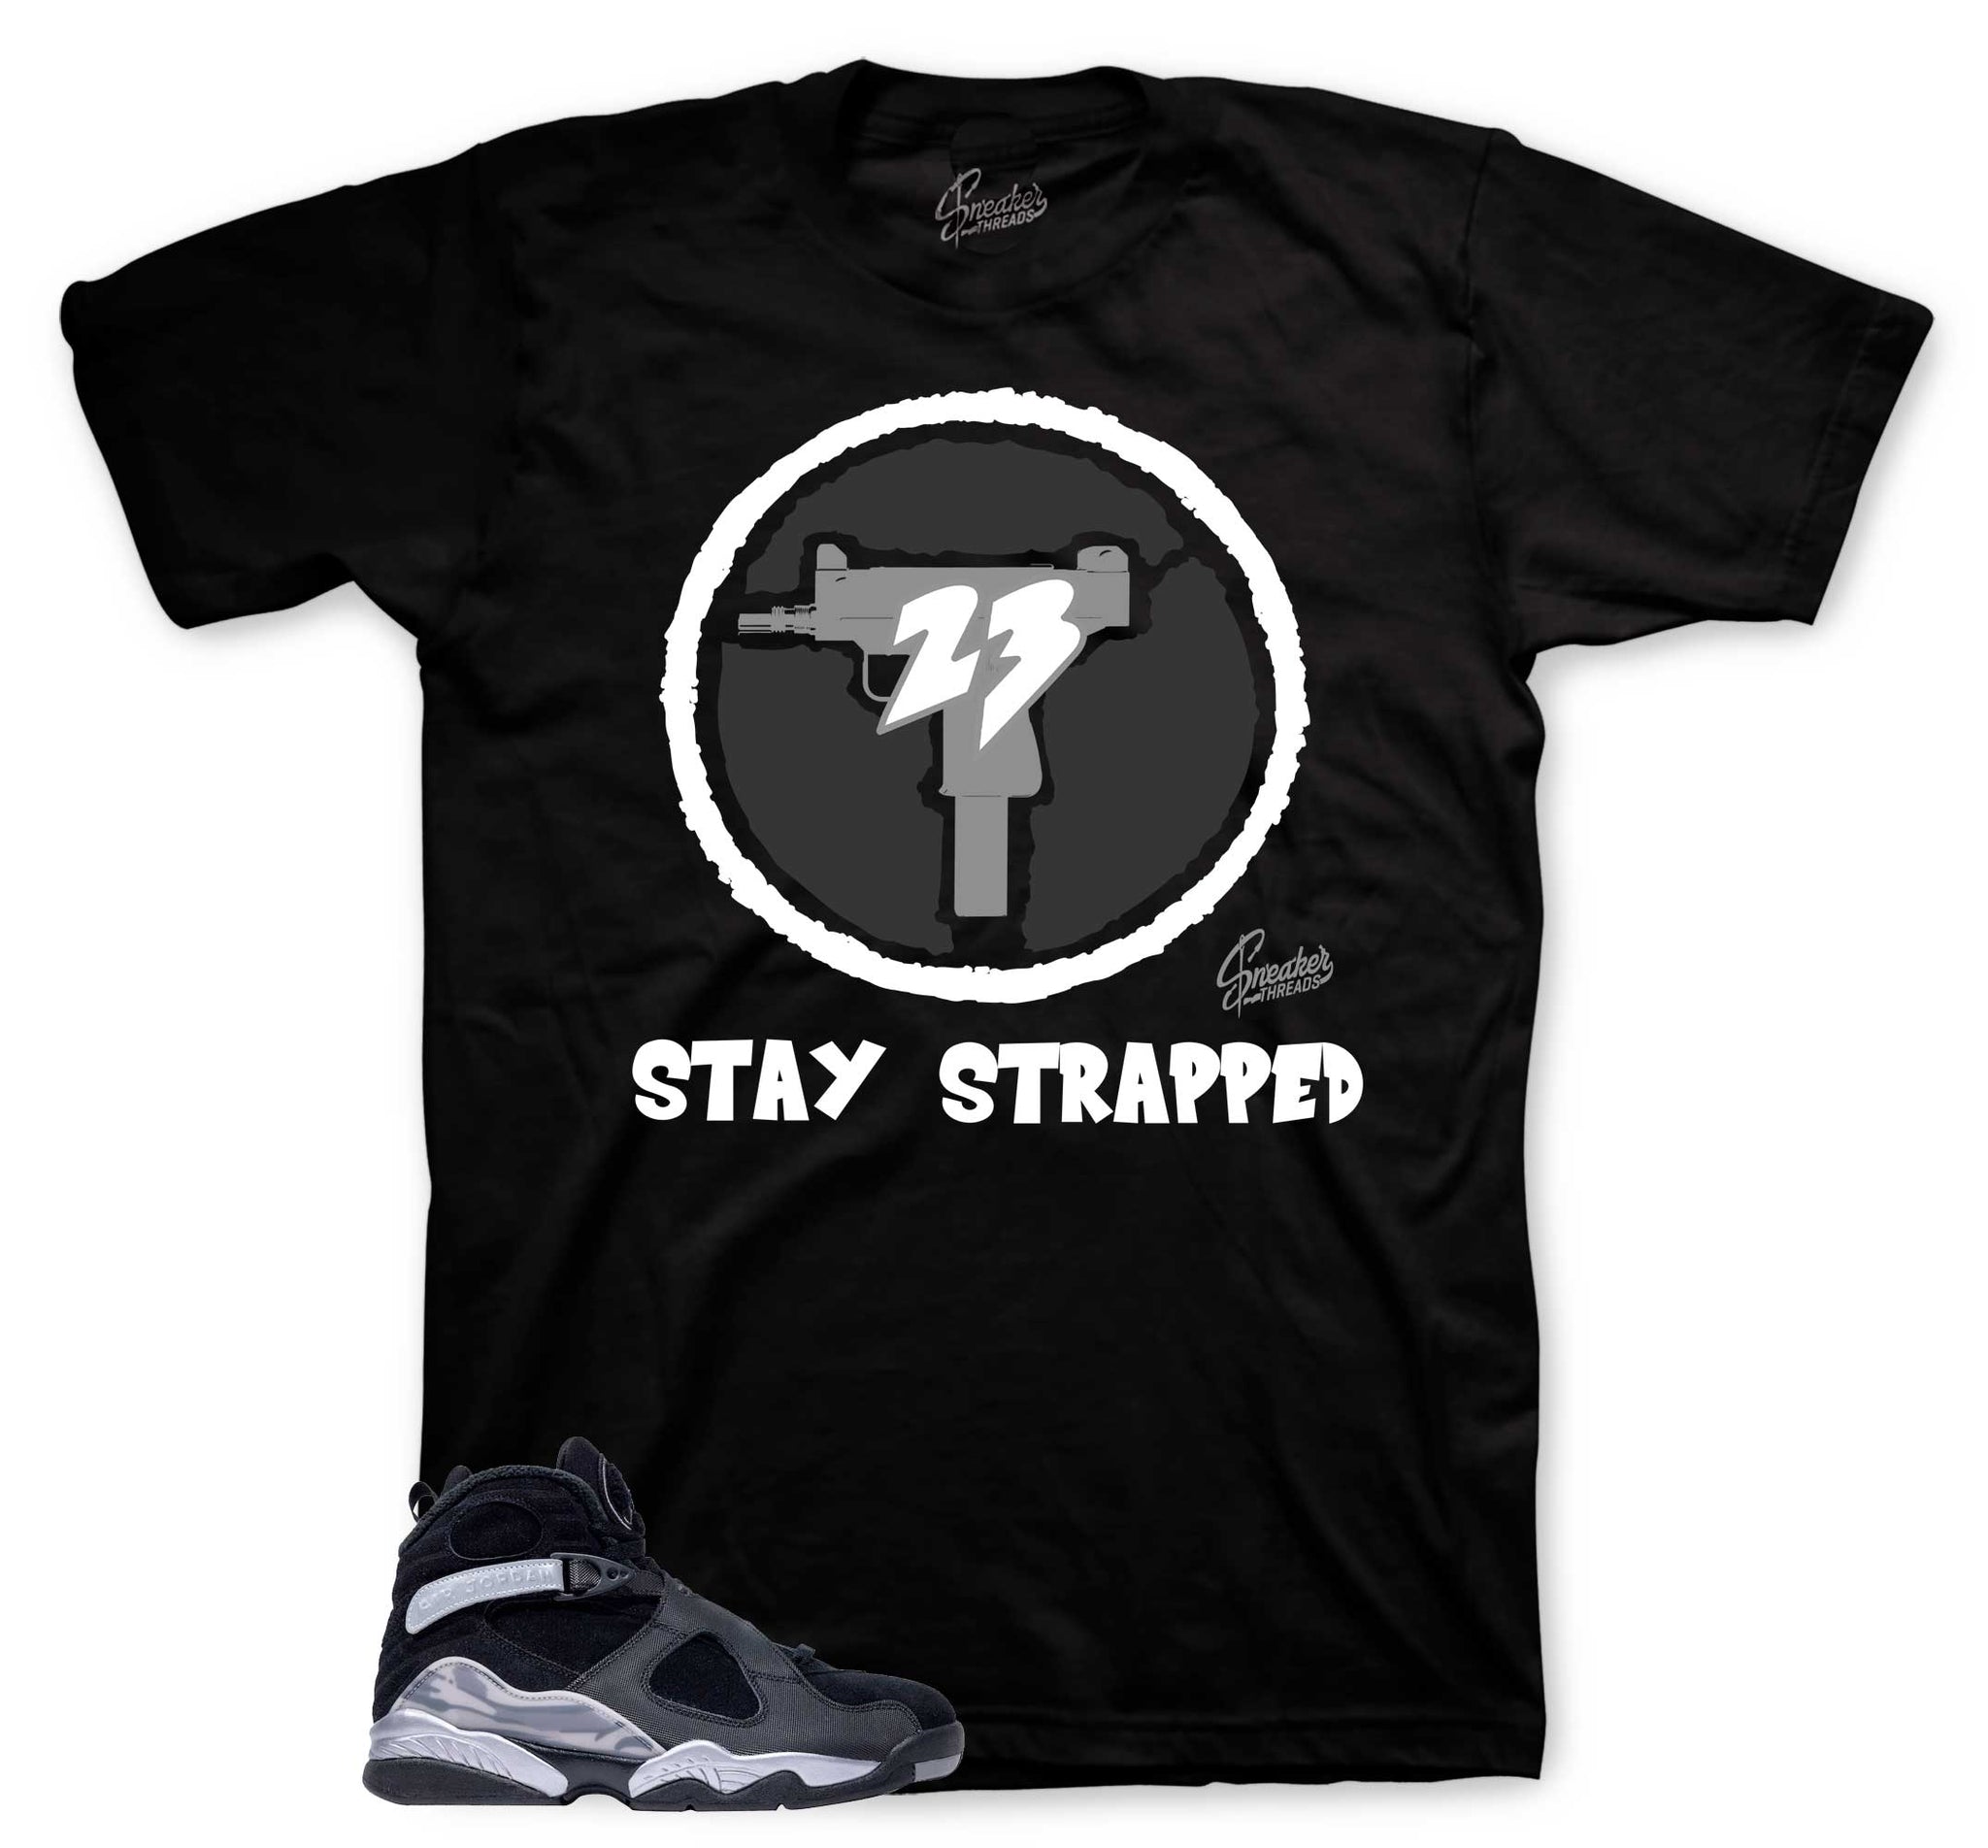 Retro 8 Gunsmoke Shirt - Stay Strapeed - Black